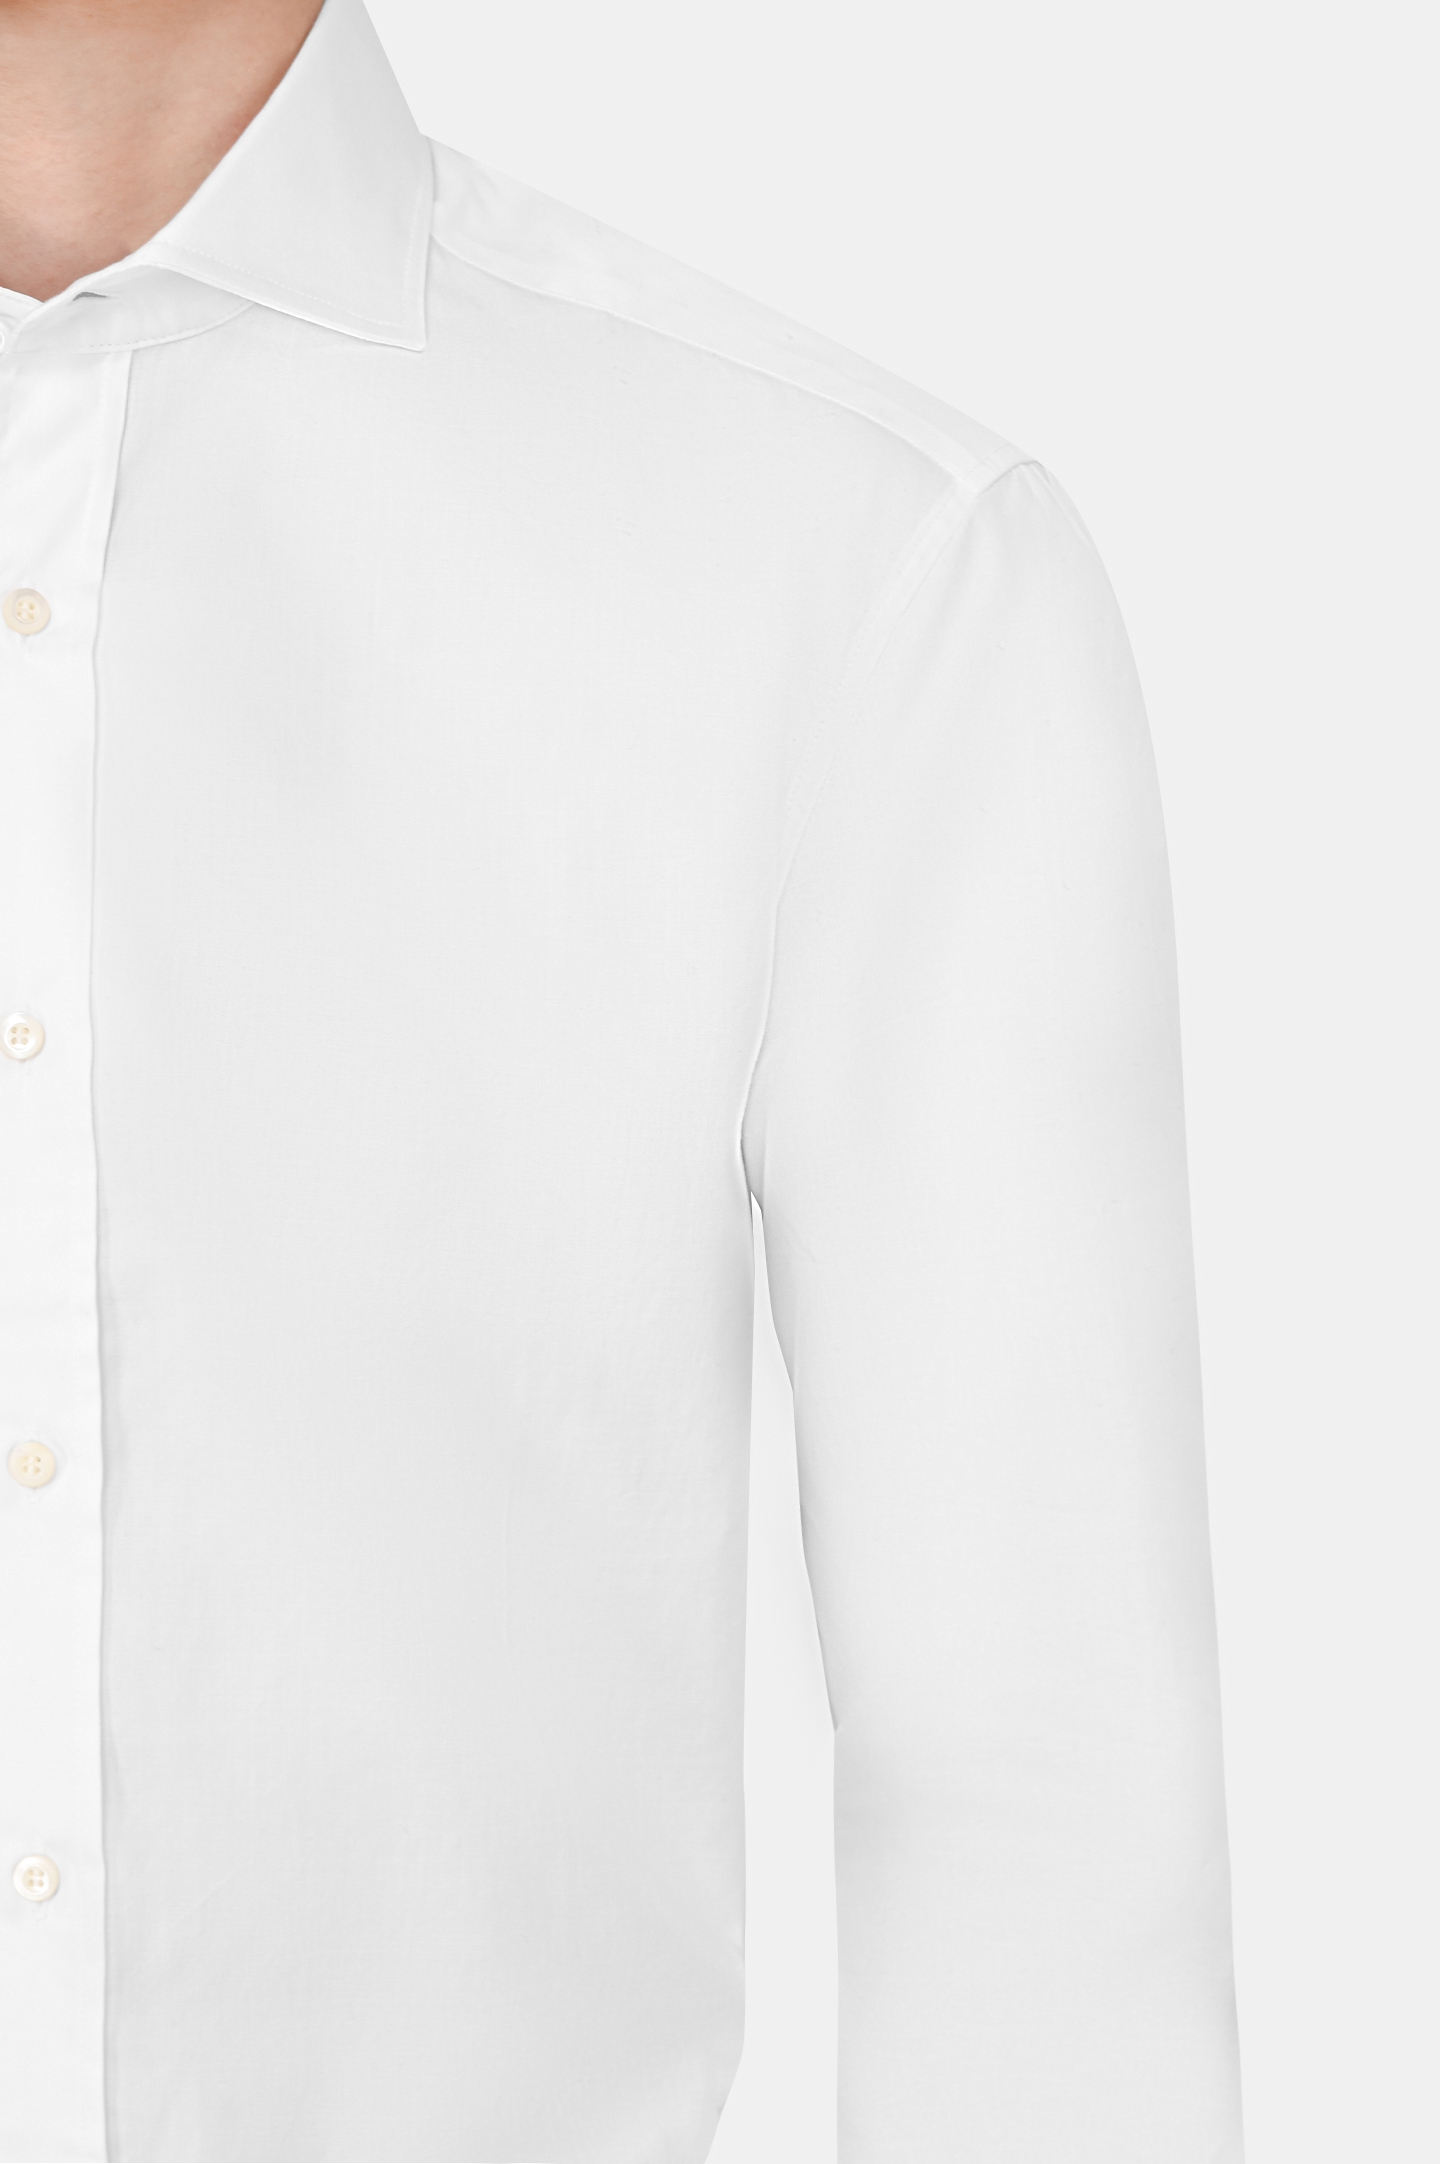 Рубашка BRUNELLO  CUCINELLI M0UC40028, цвет: Белый, Мужской